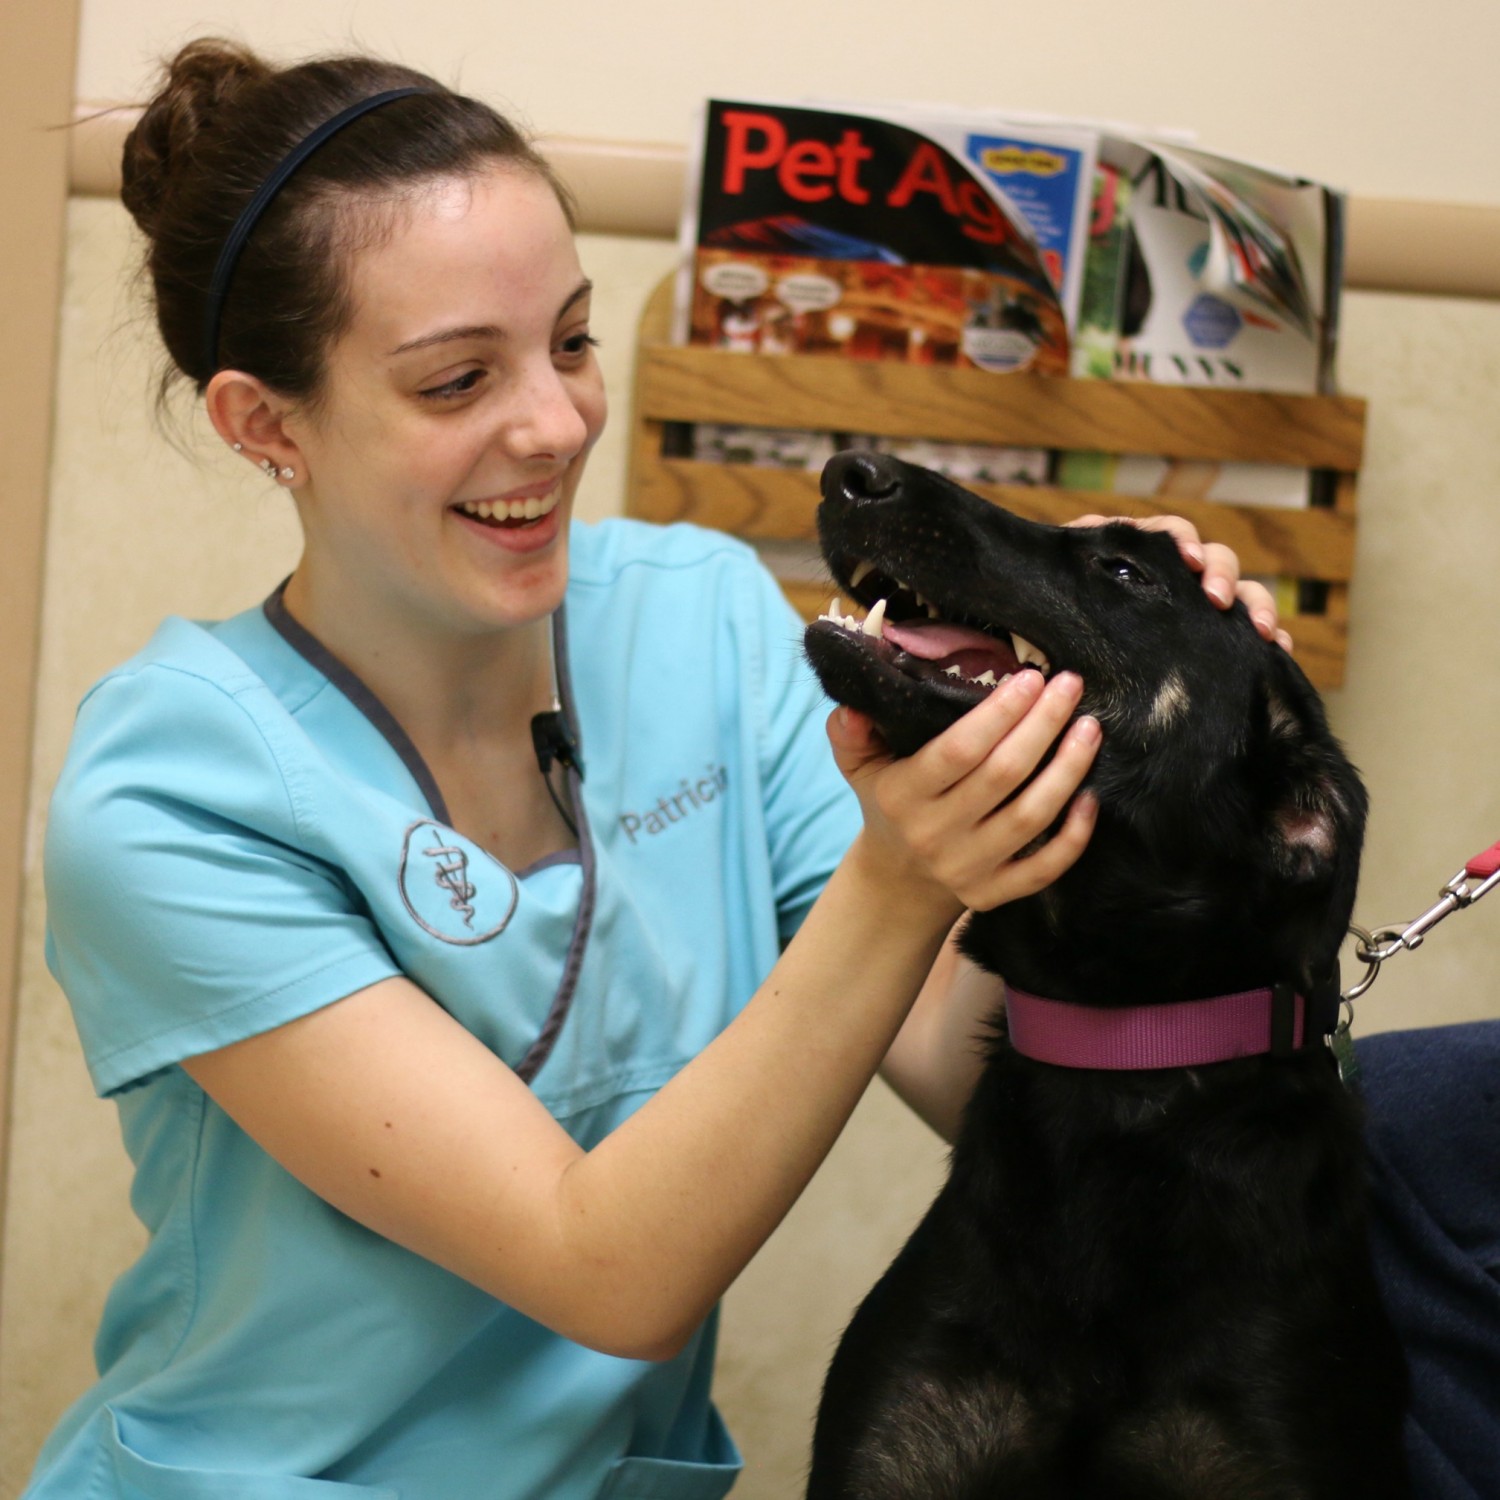 Veterinary worker examining large, black dog's teeth